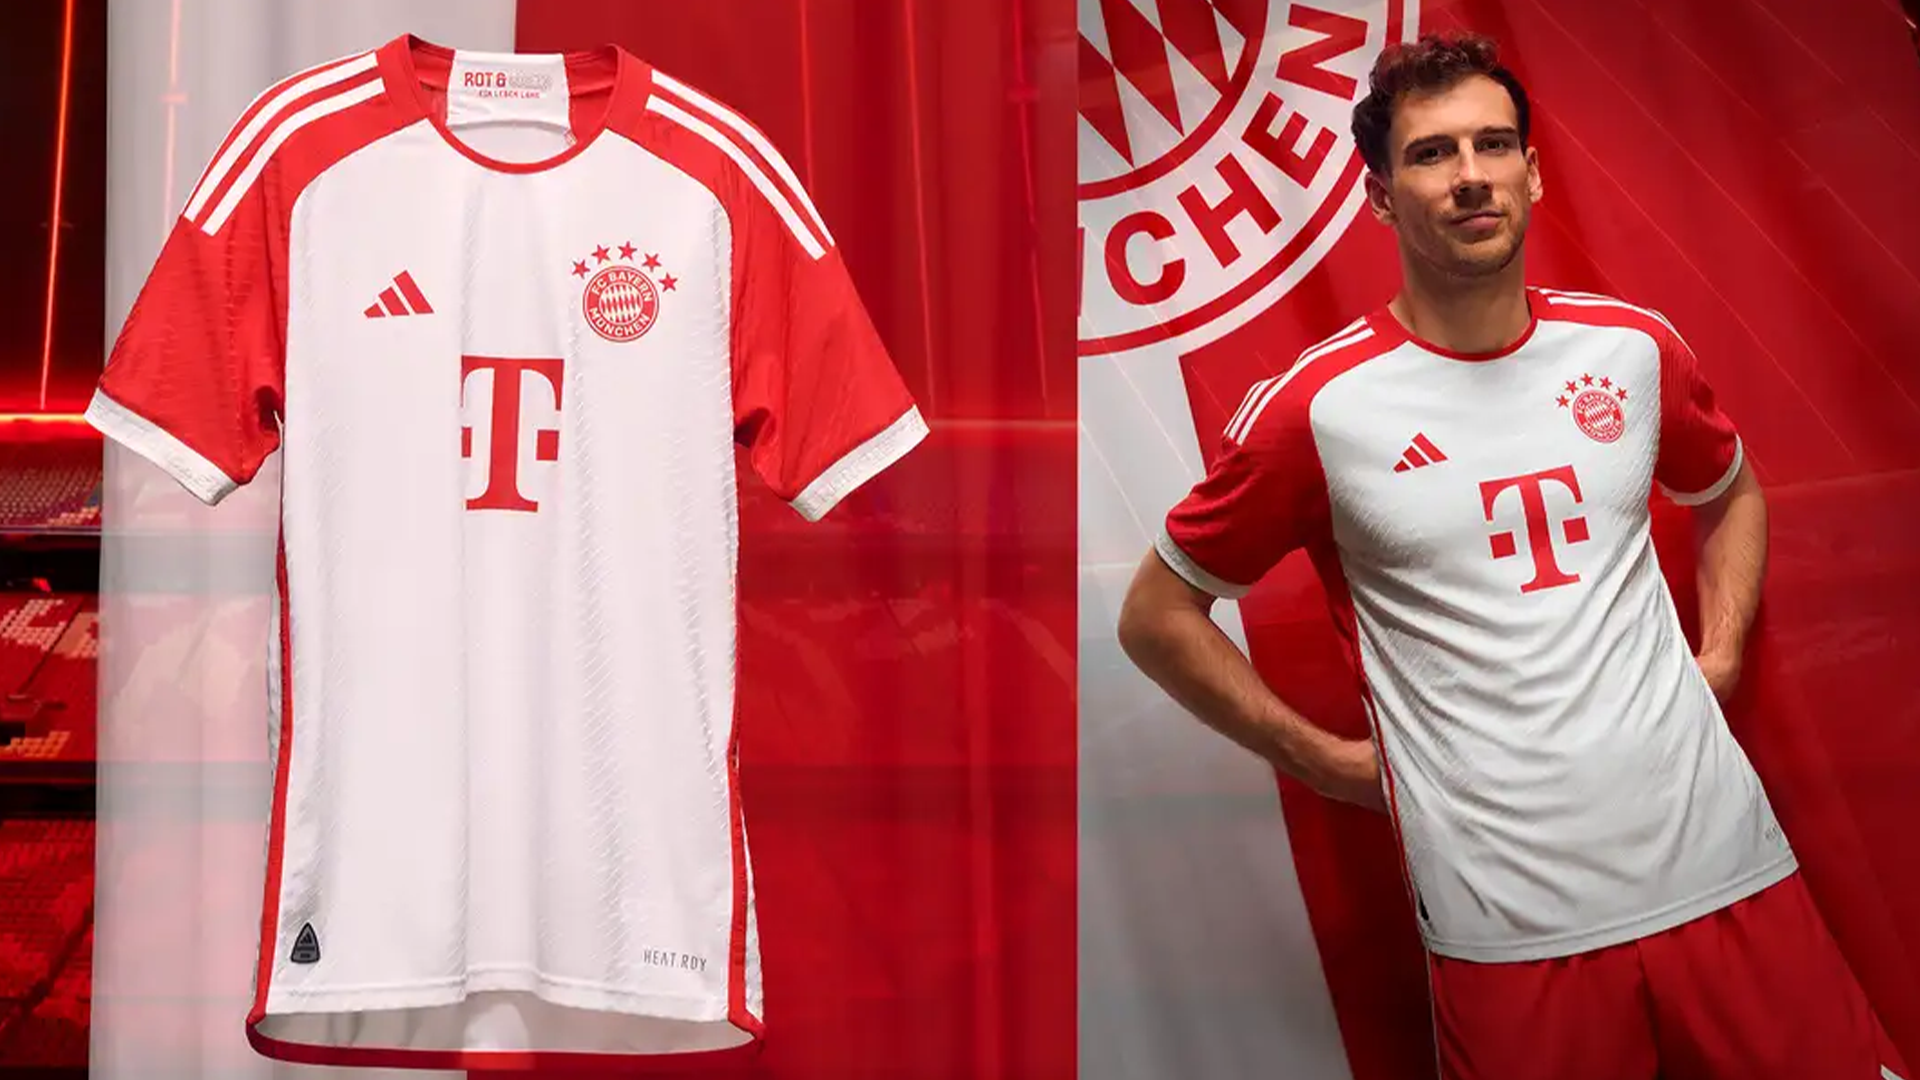 Away Jersey: 2nd Shirt & Kit  Official FC Bayern Munich Store